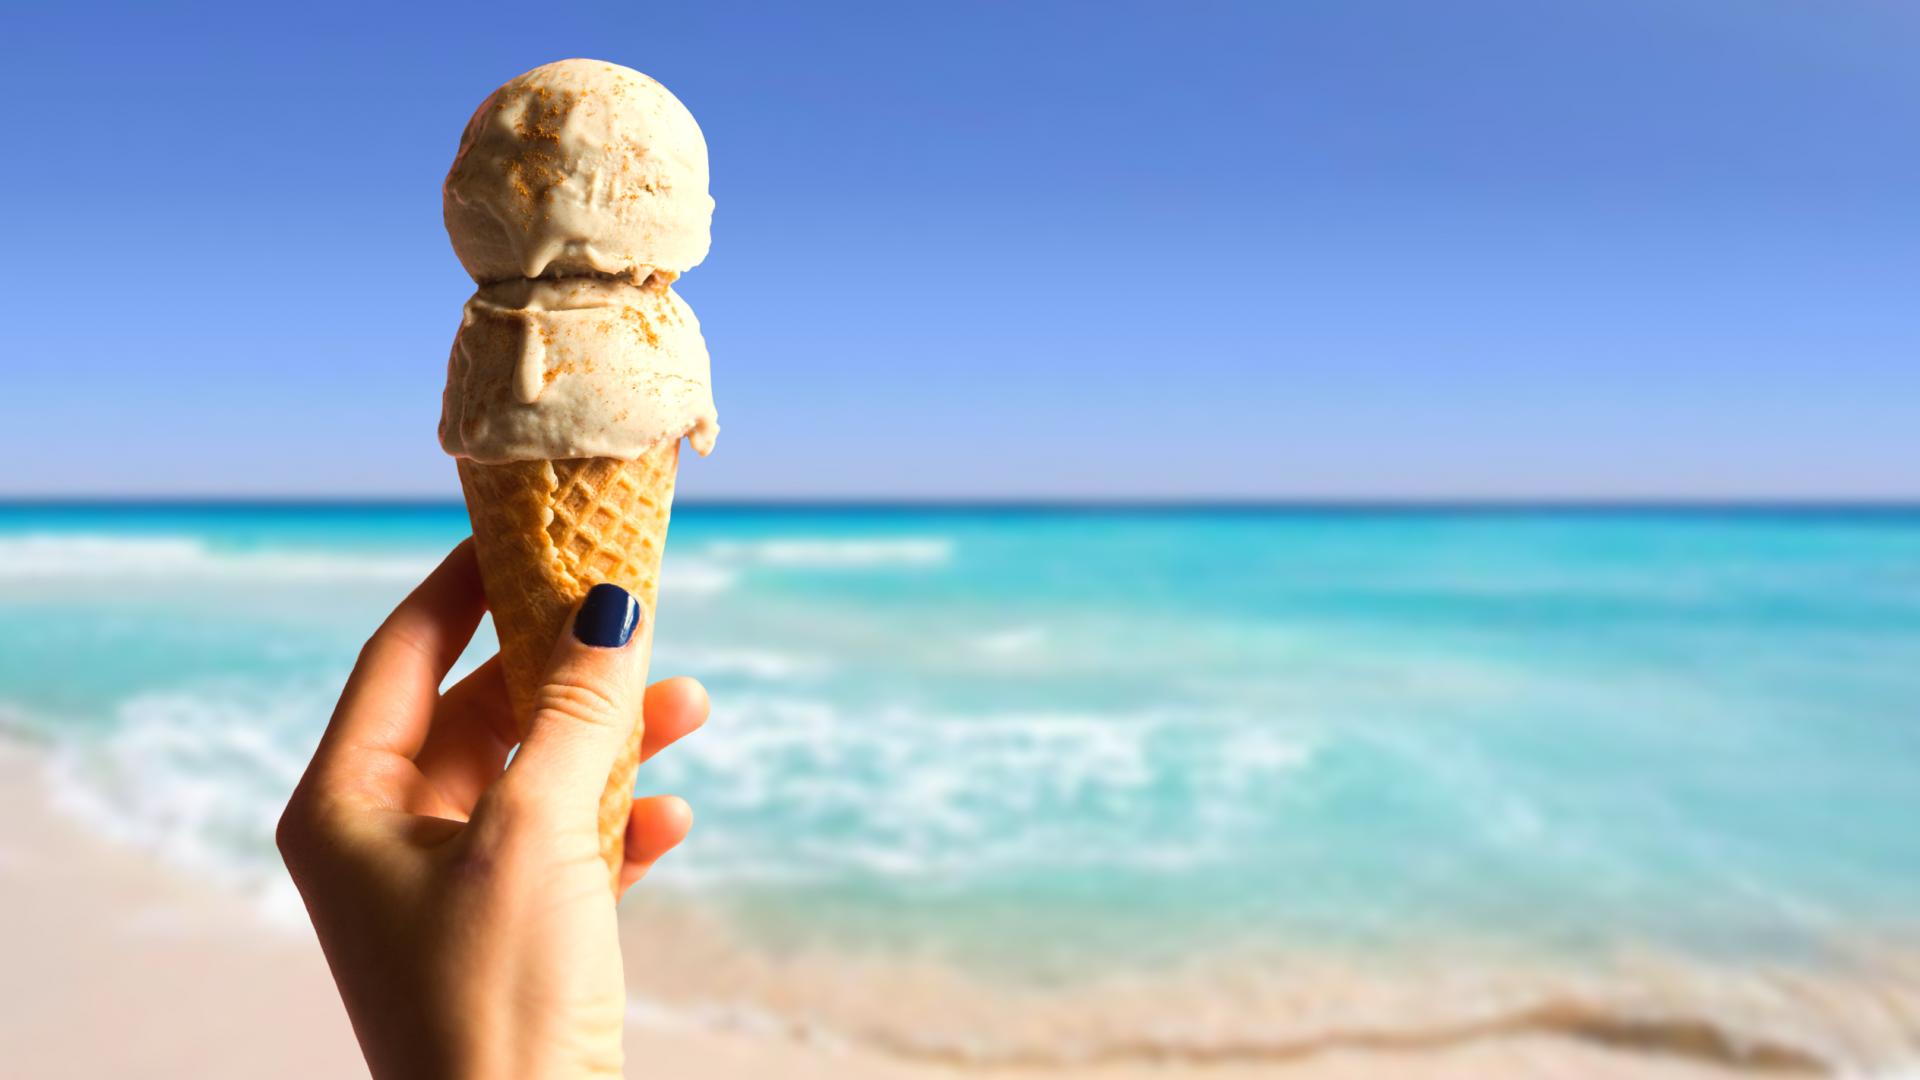 Wallpaper Ice-cream cone, hand, beach